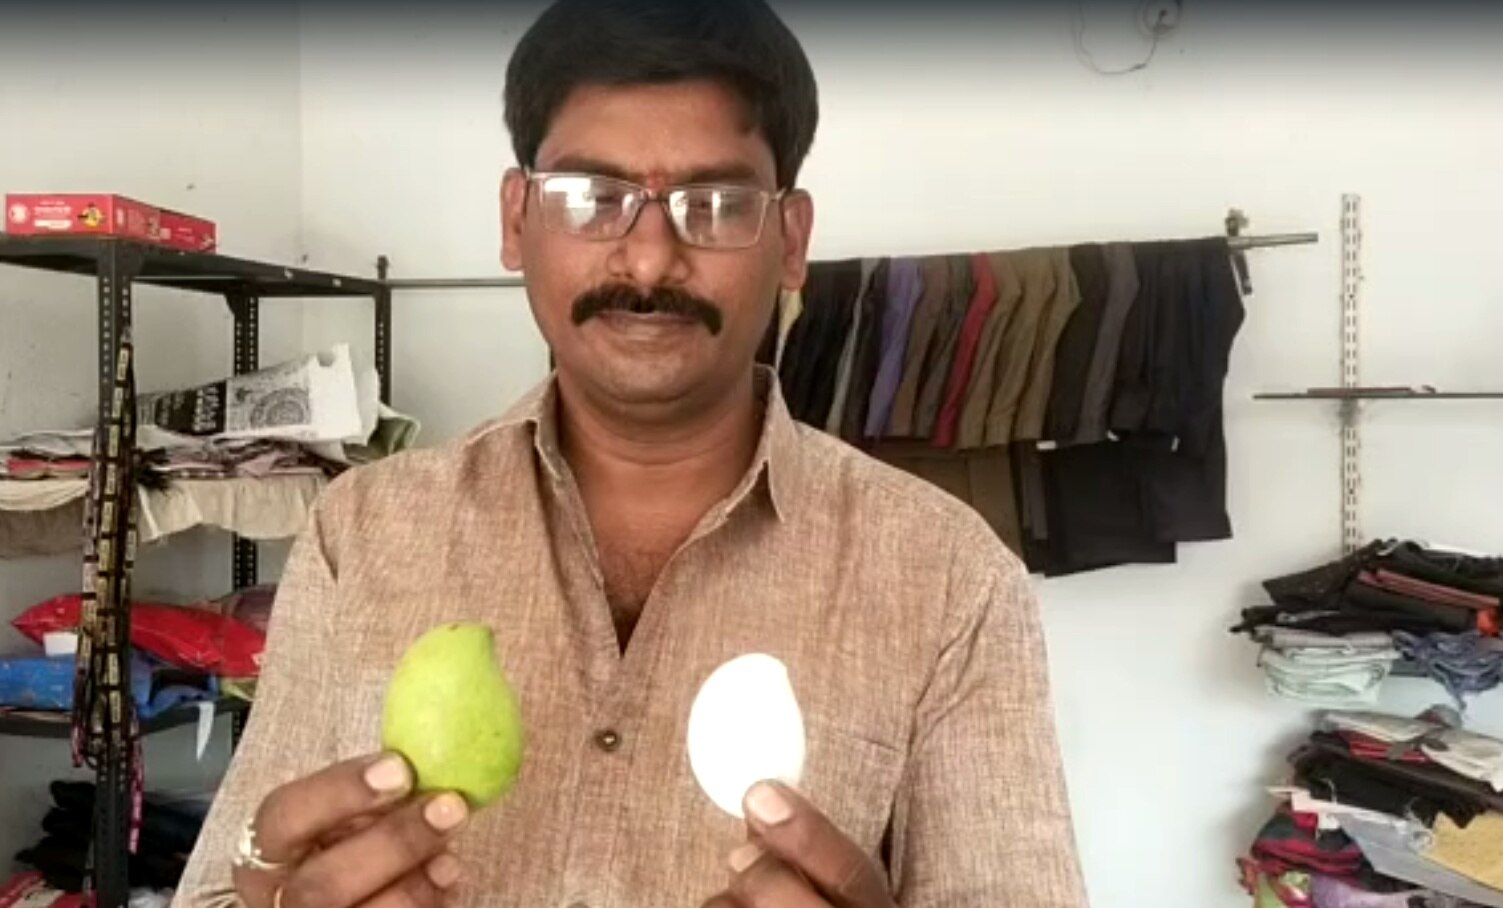 Mango Shape Egg : మామిడి కాయ లాంటి గుడ్డు! చూసేందుకు ఎగబడుతున్న జనం